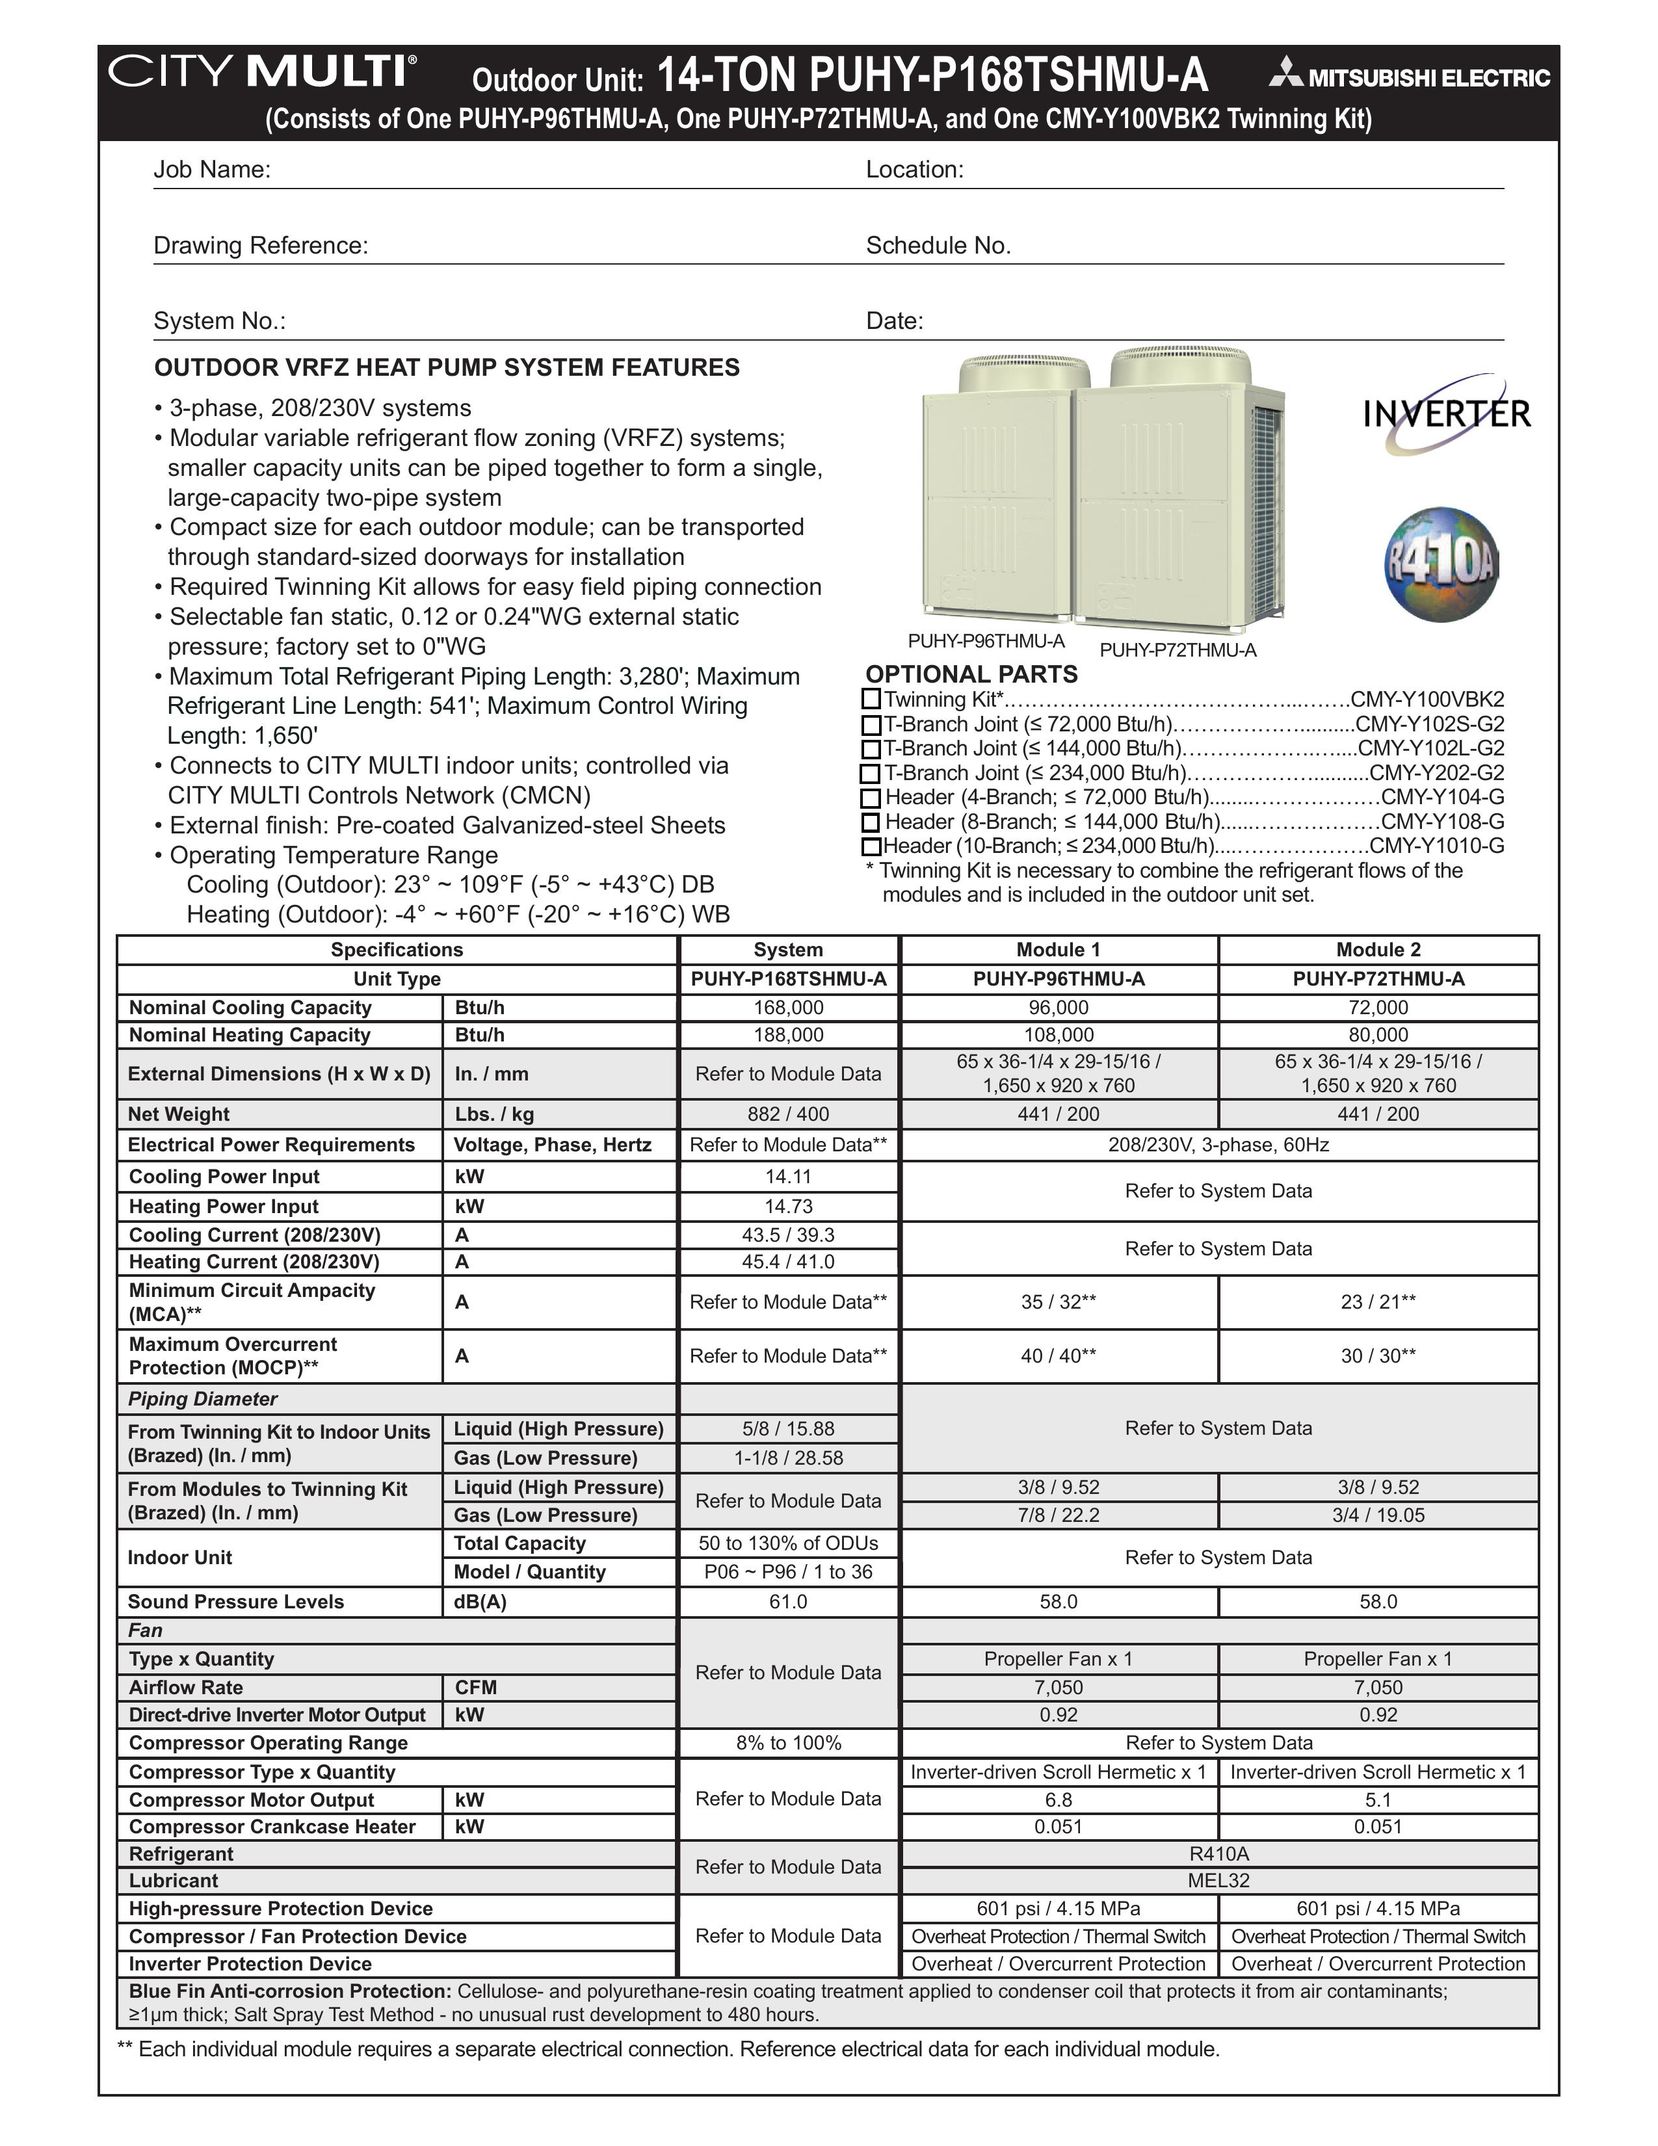 Mitsubishi Electronics PUHY-P96THMU-A Heat Pump User Manual